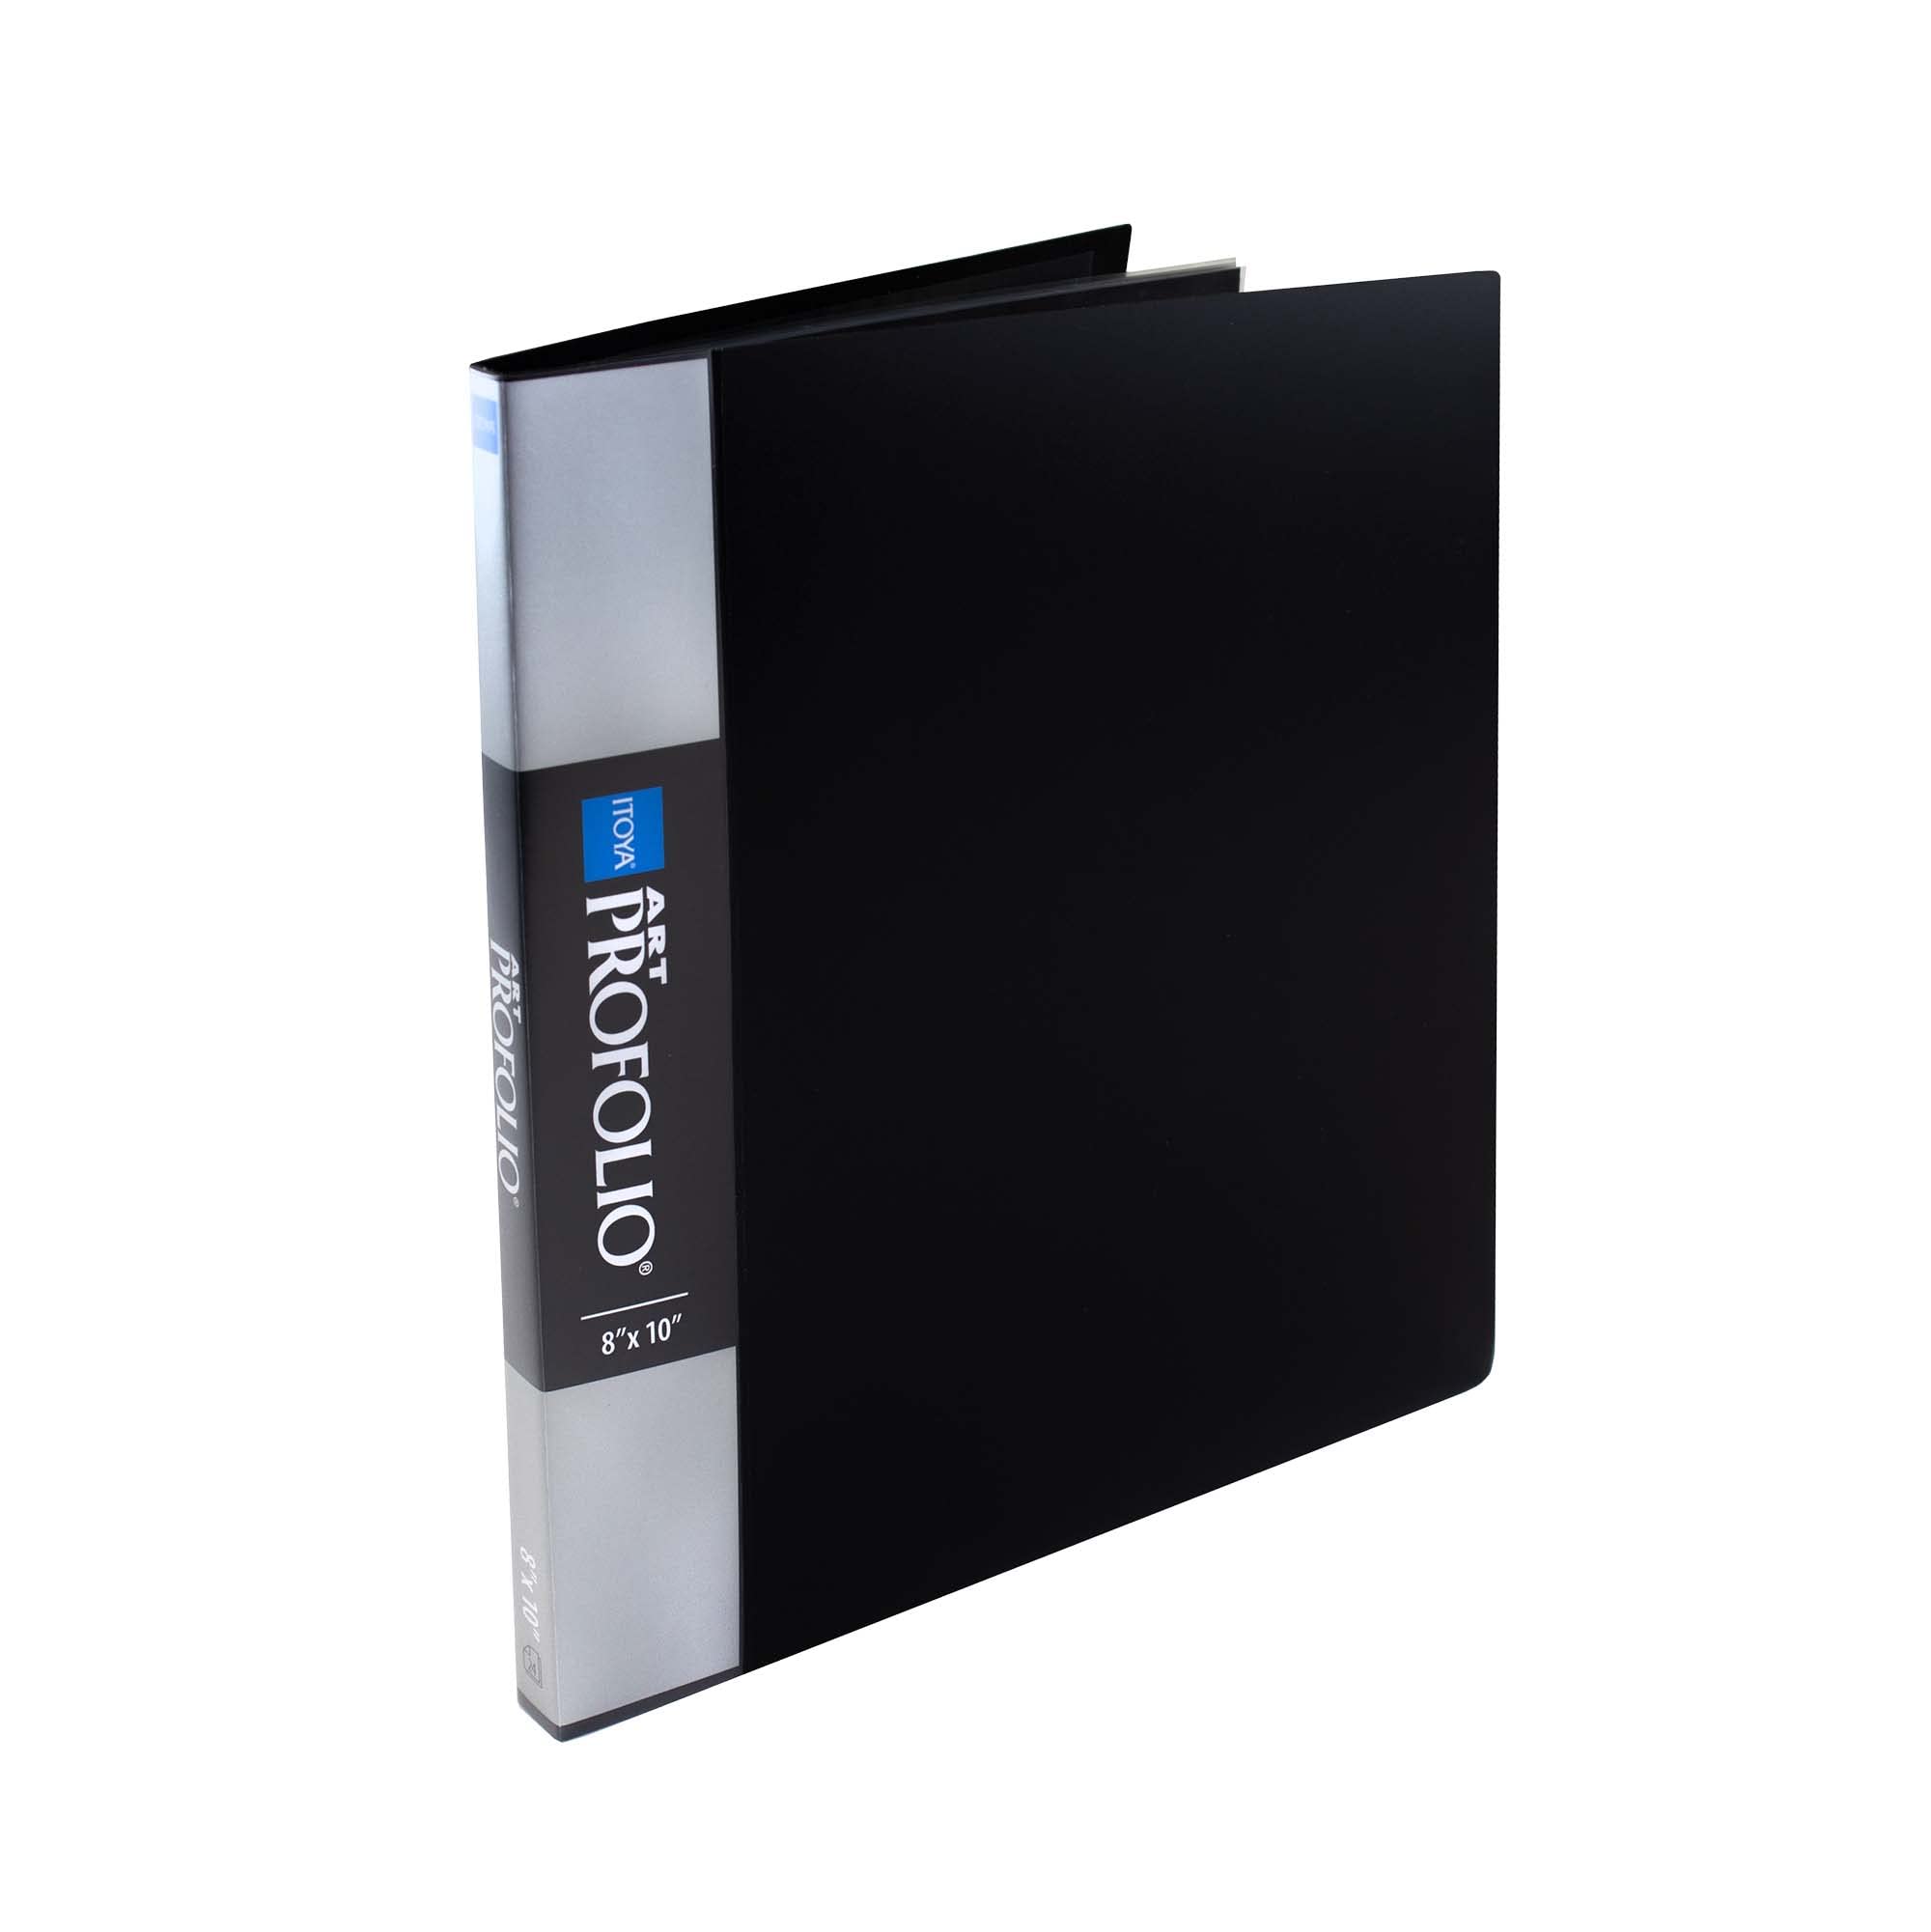 Itoya ProFolio Evolution 18x24 Black Photo Album Book with 48 Pages - Photo  Album Art Portfolio Folder for Artwork - Picture Book Portfolio Binder 